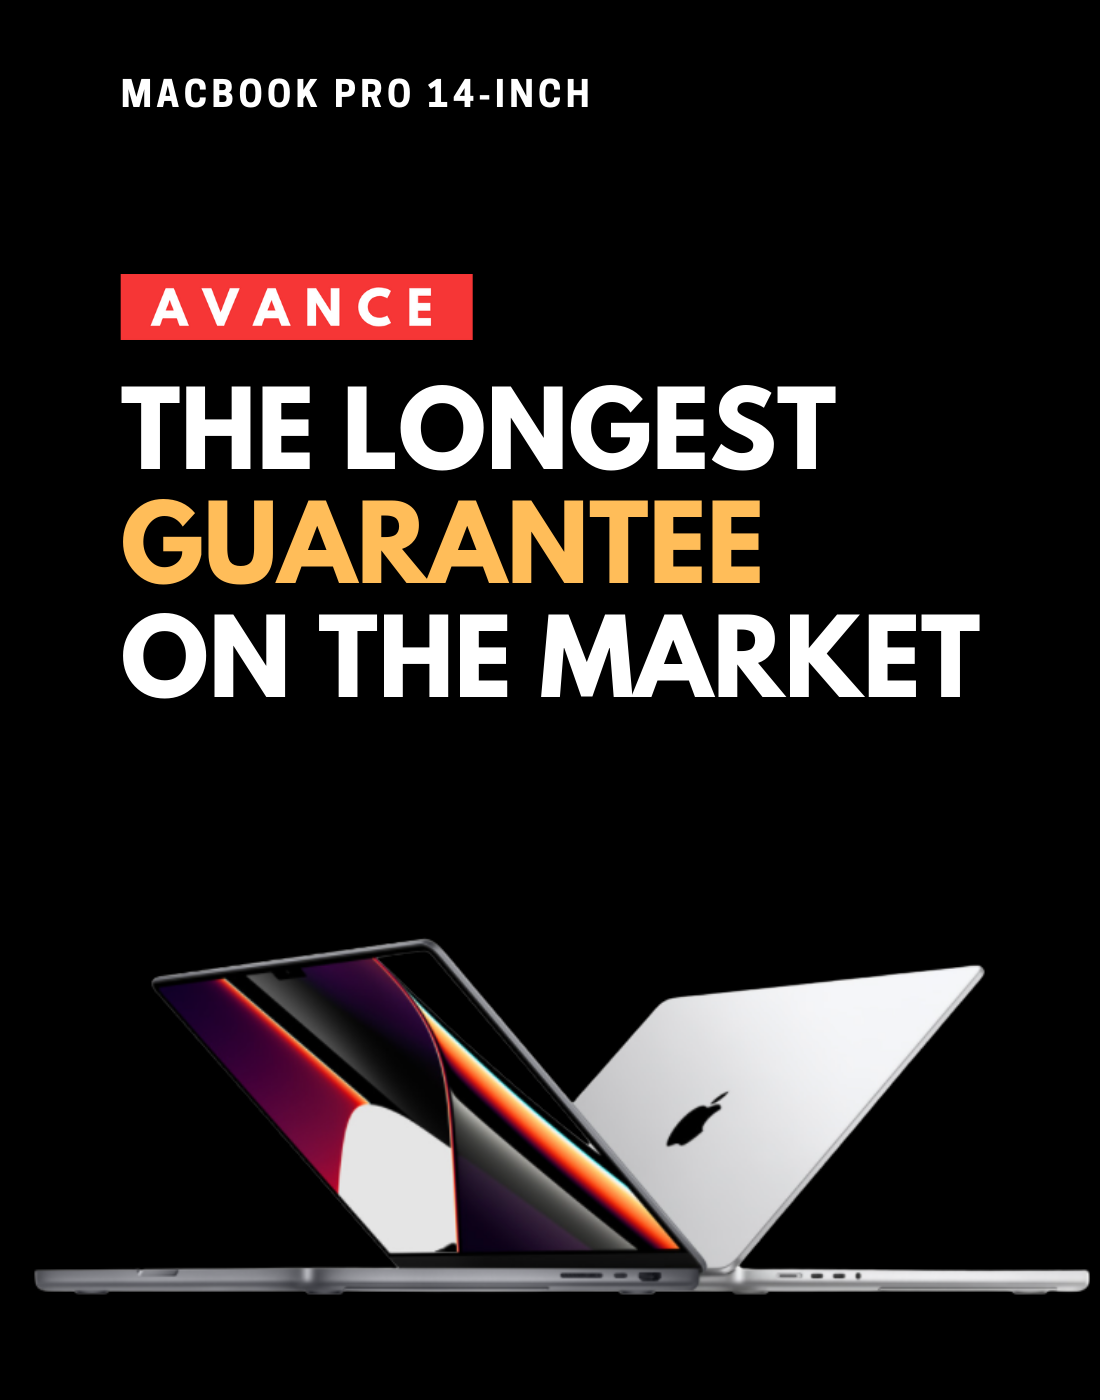 The Longest Guarantee on the Market